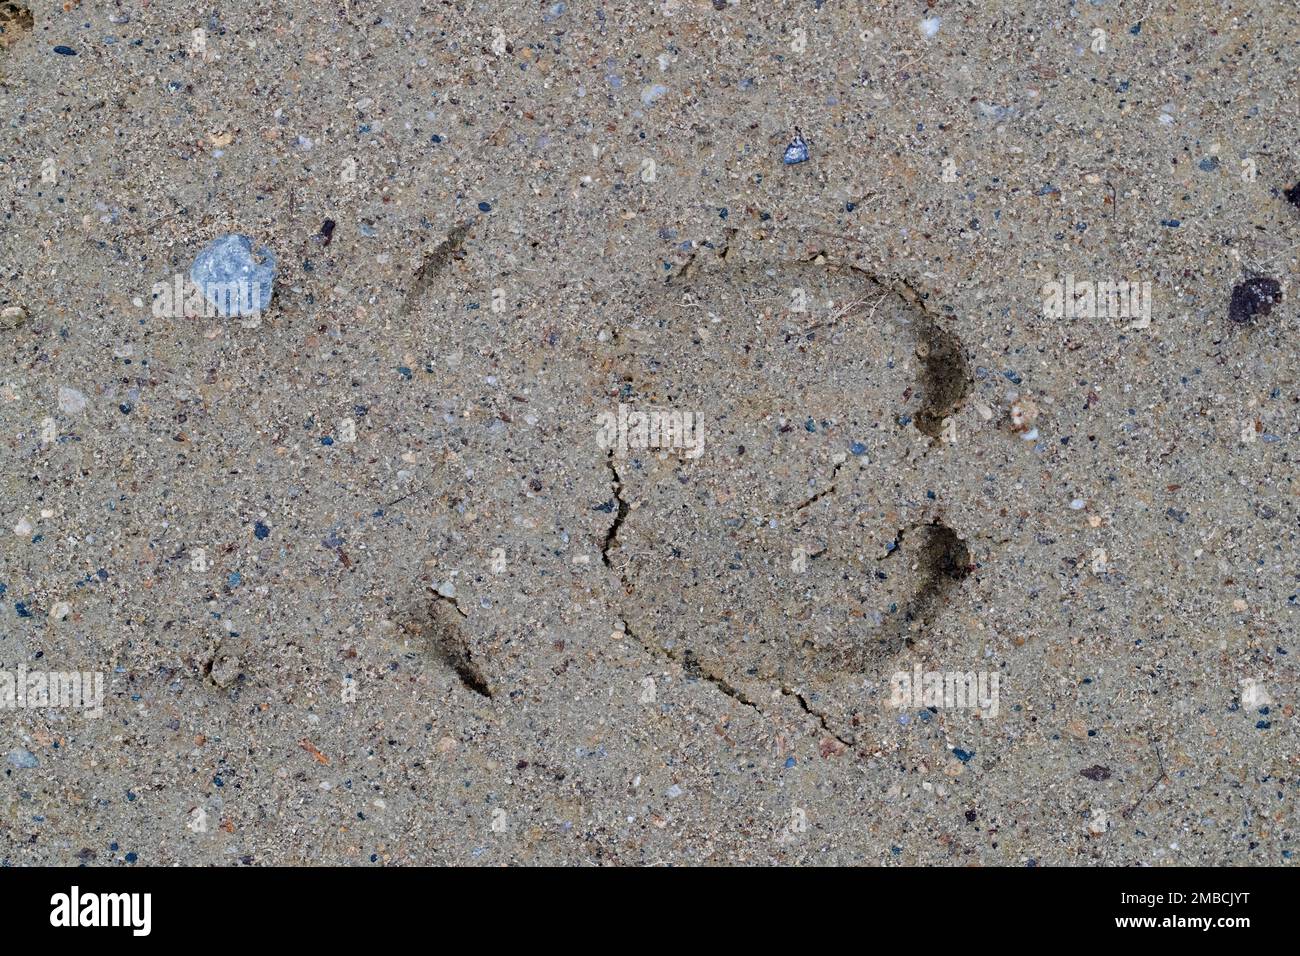 Reindeer (Rangifer tarandus tarandus) footprint in sand showing cloven hooves / toes and dewclaws Stock Photo